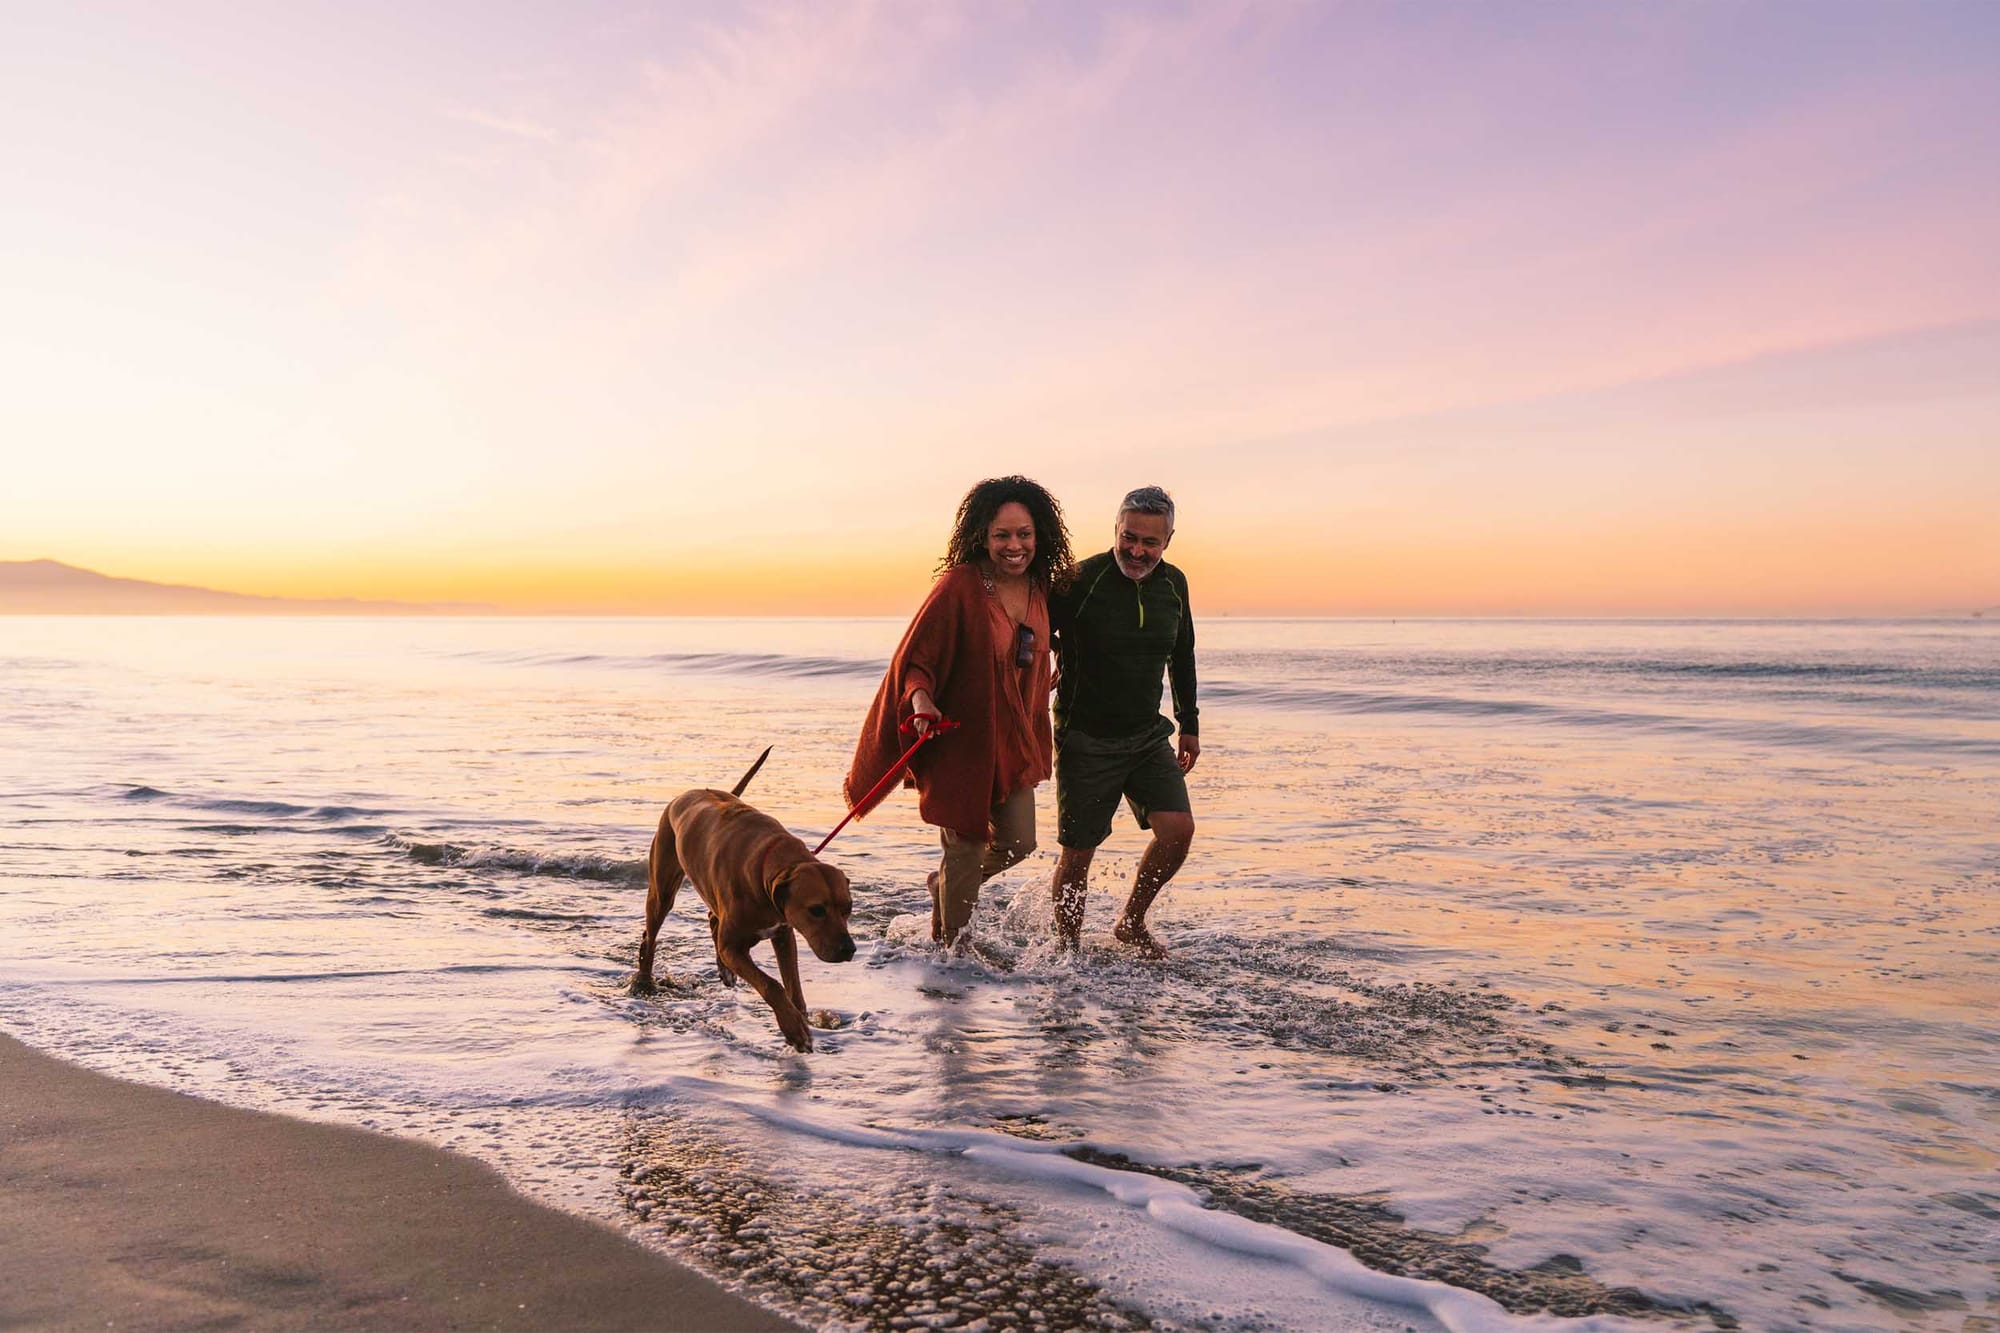 Santa Barbara's Dog-Friendly Beaches and Hikes